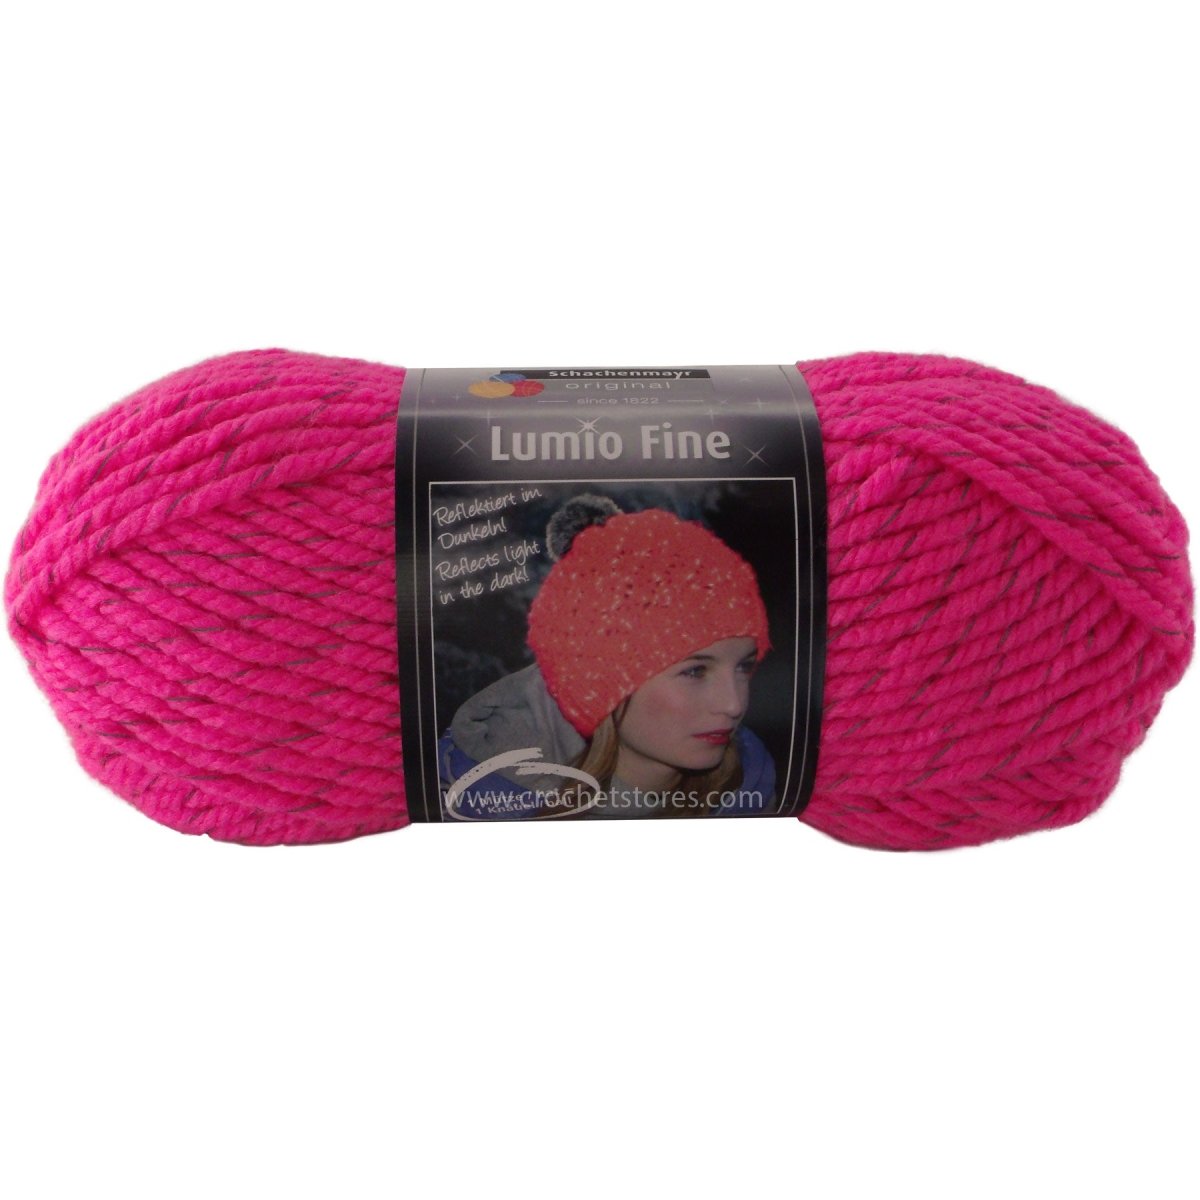 LUMIO FINE - Crochetstores9807557-1354053859047241